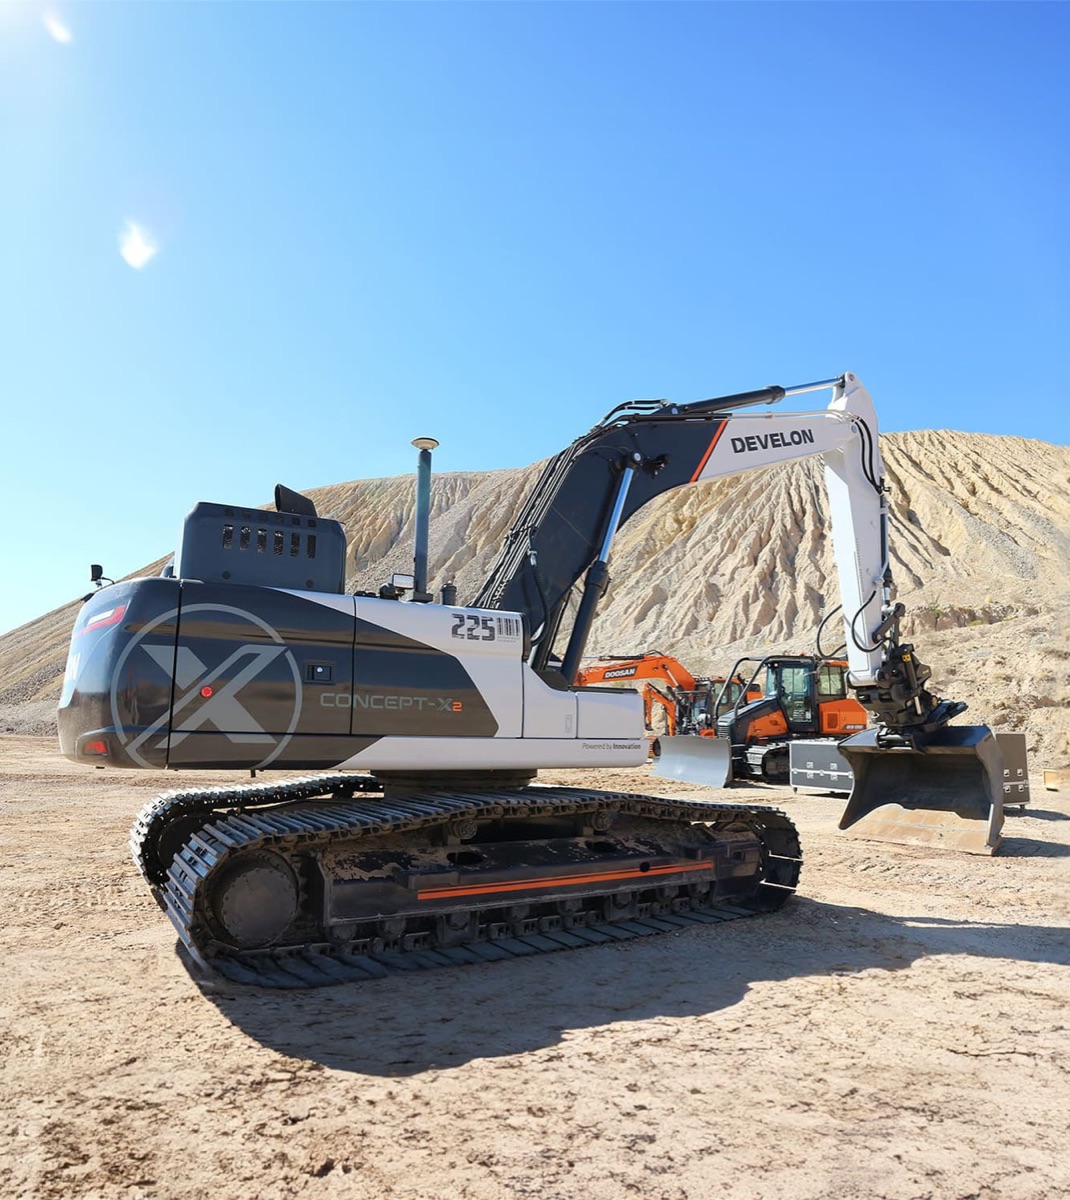 Concept-X2 excavator